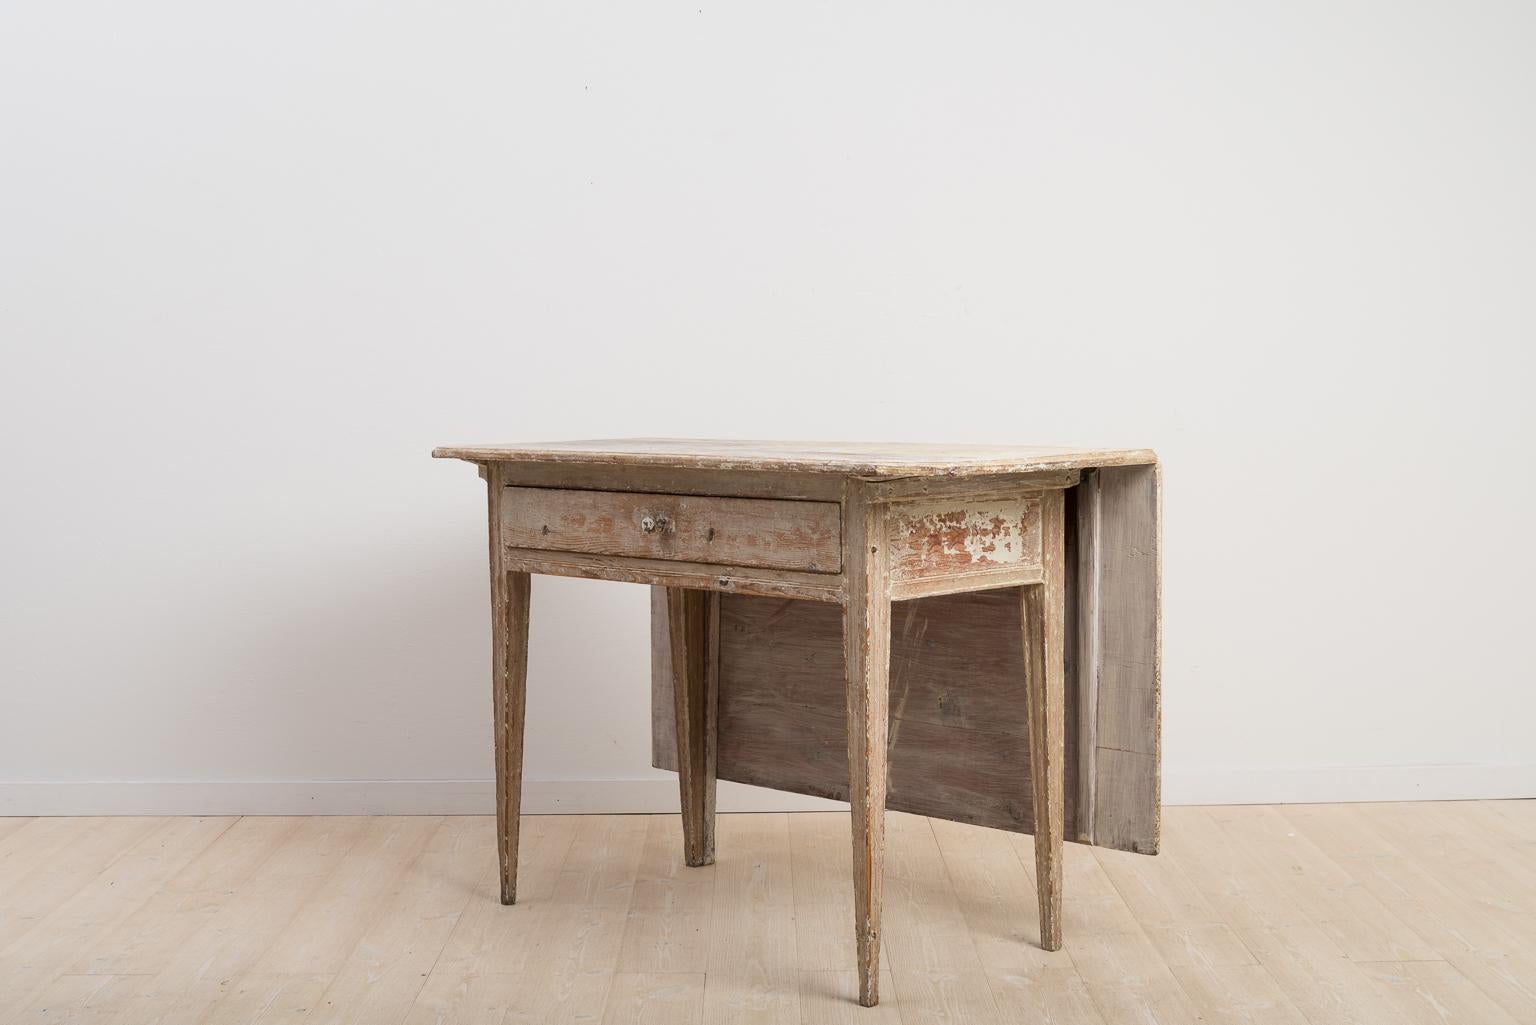 18th Century Turn of the Century 1700-1800 Swedish Gustavian Desk in Original Condition